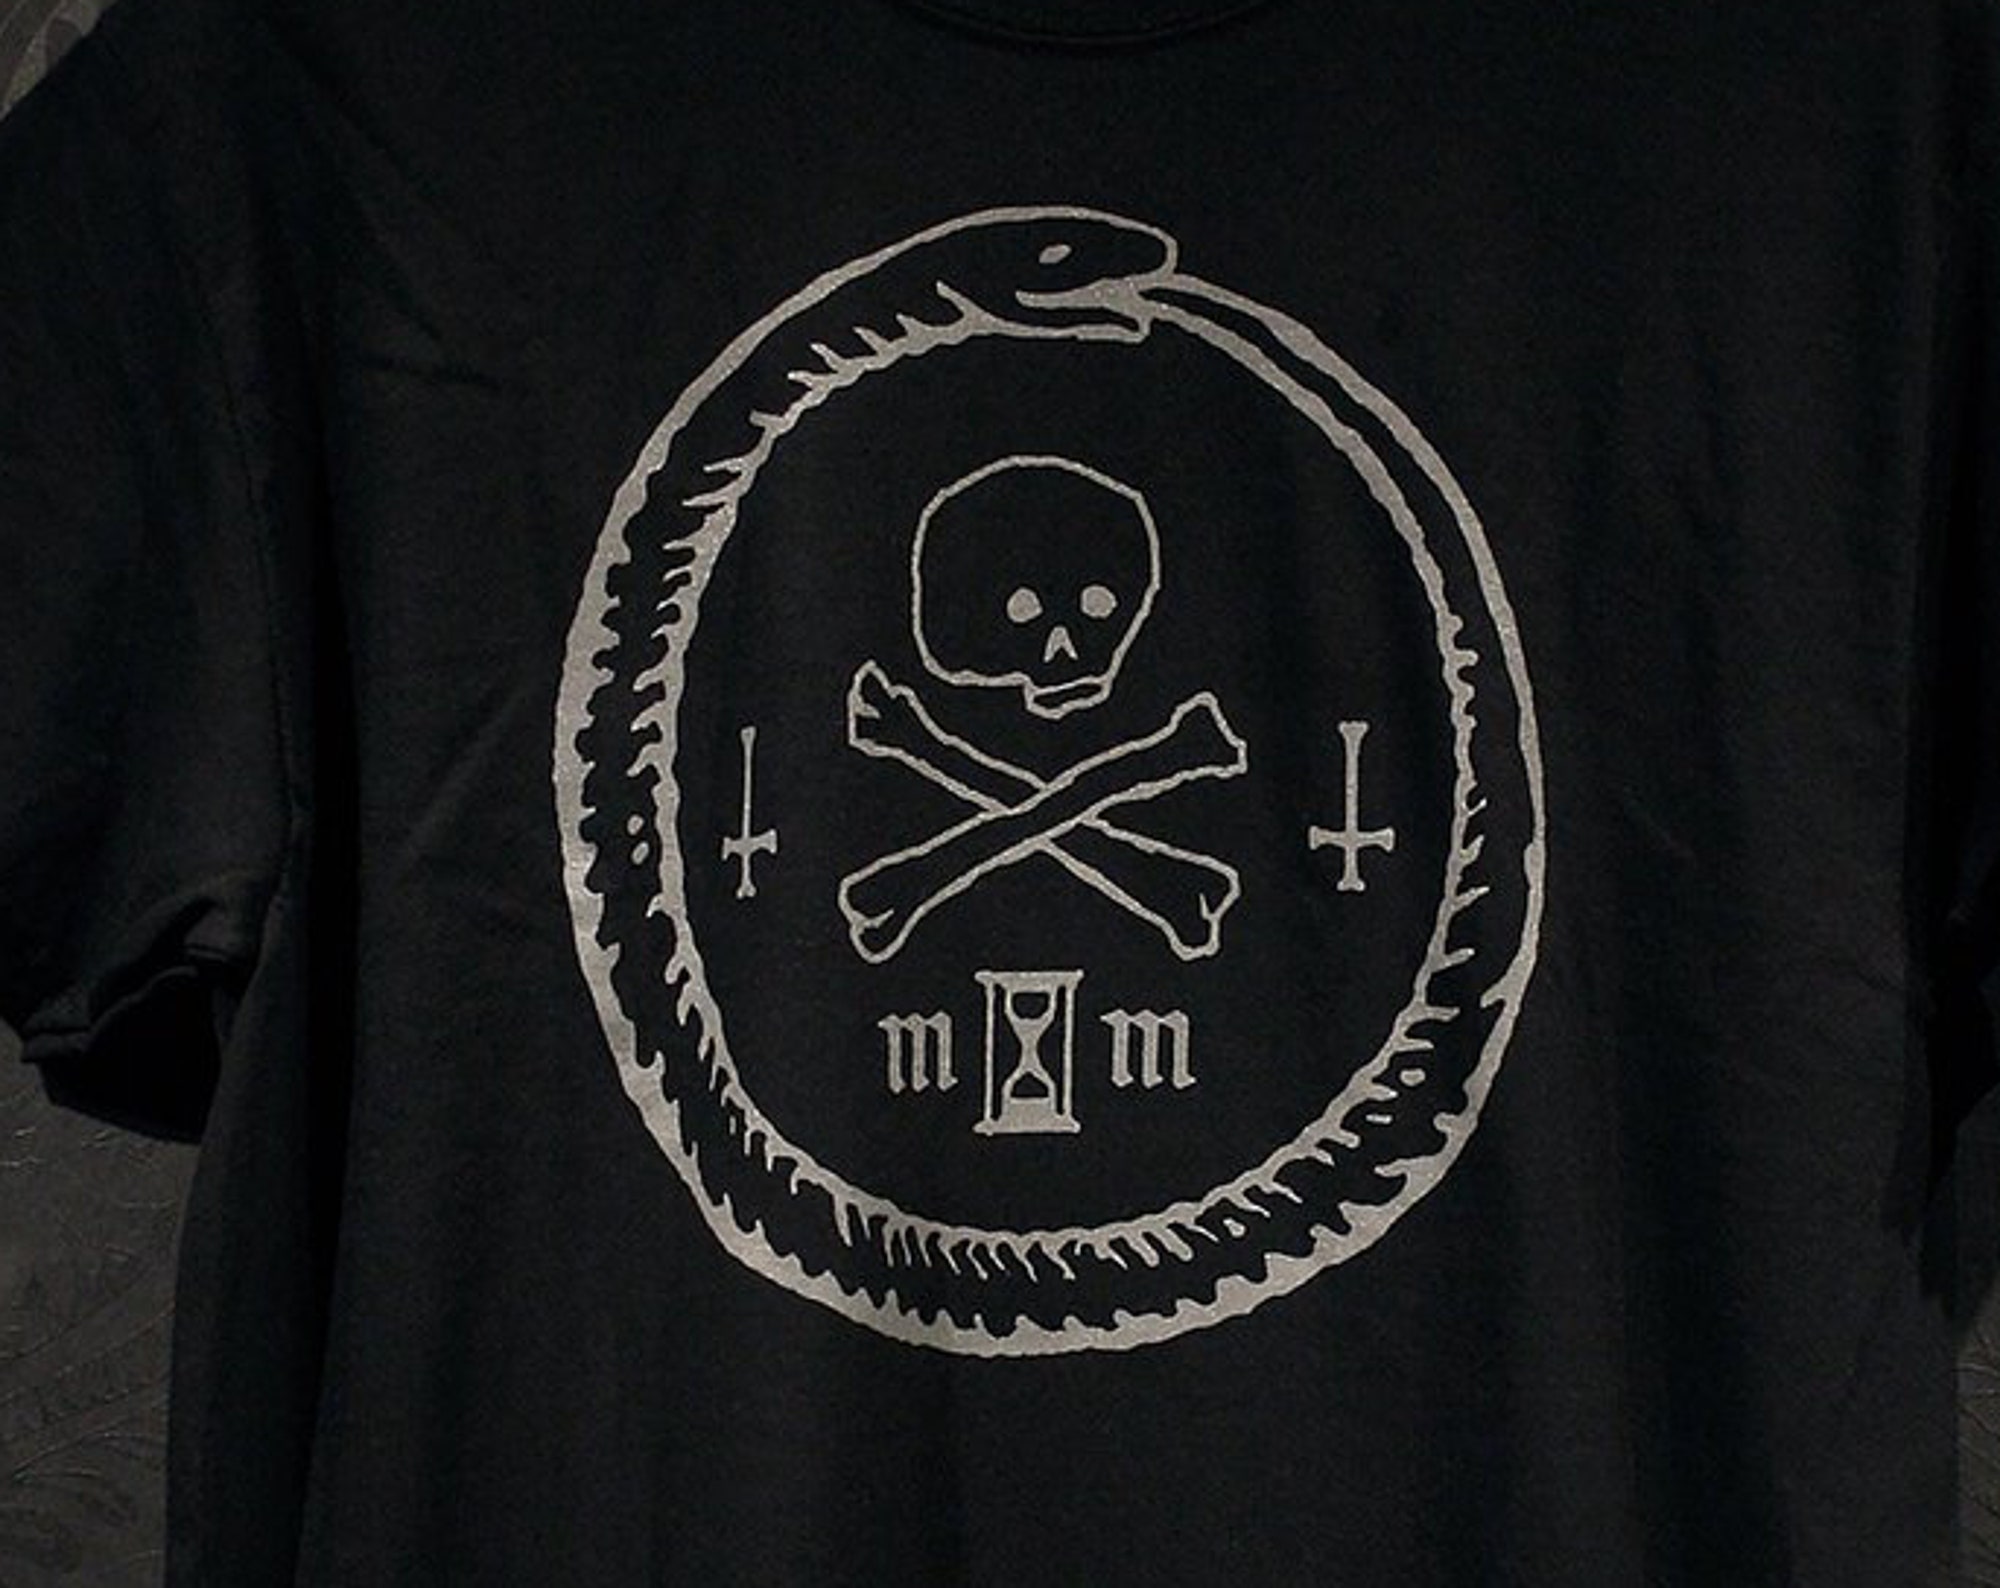 Discover Ouroboros with skull, memento mori - T-shirt